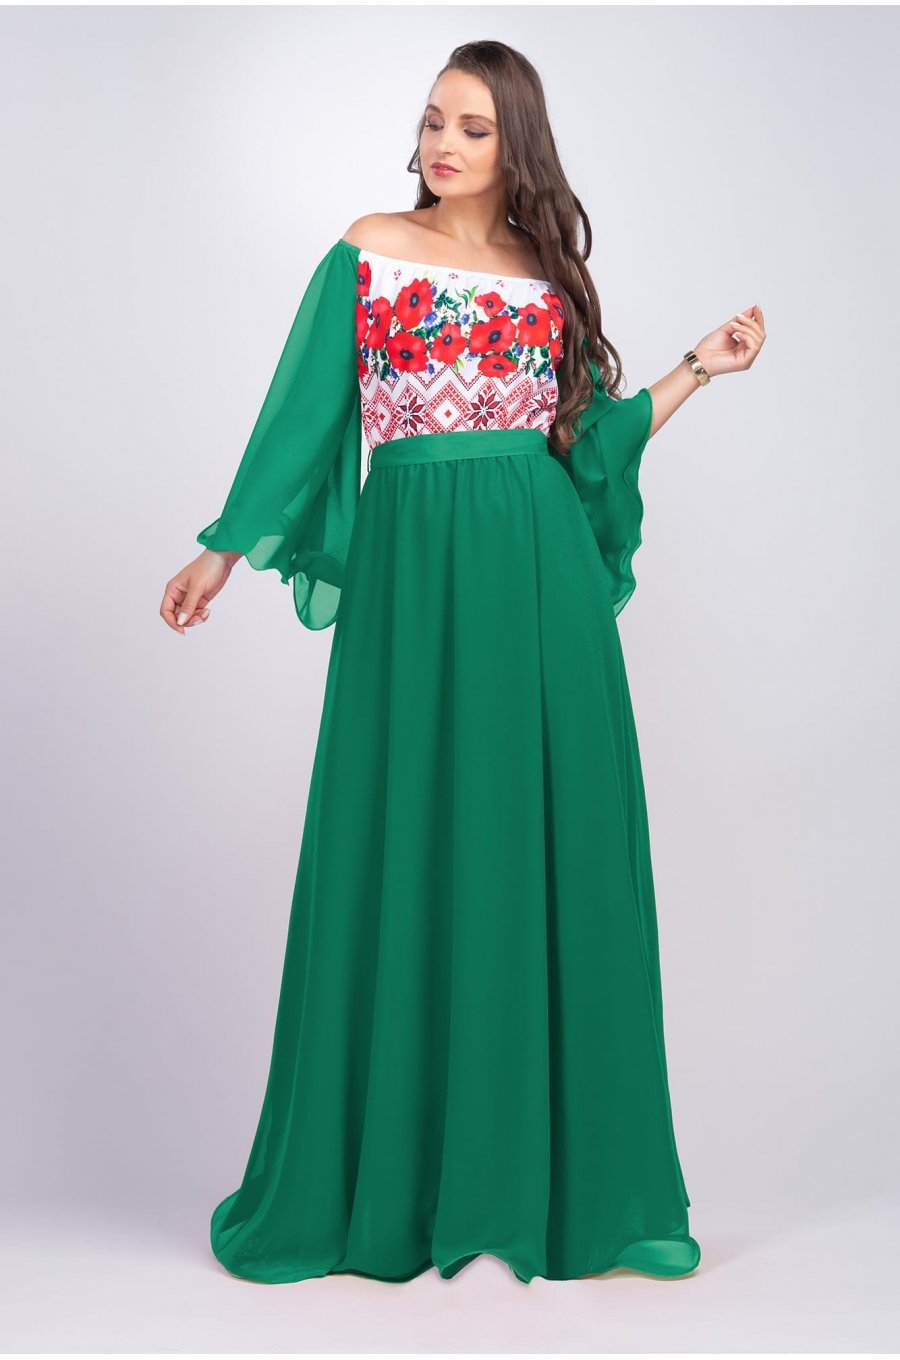 Rochie traditionala eleganta lunga verde cu maci rosii cu maneci clopot Salomeea 1 - jojofashion.ro